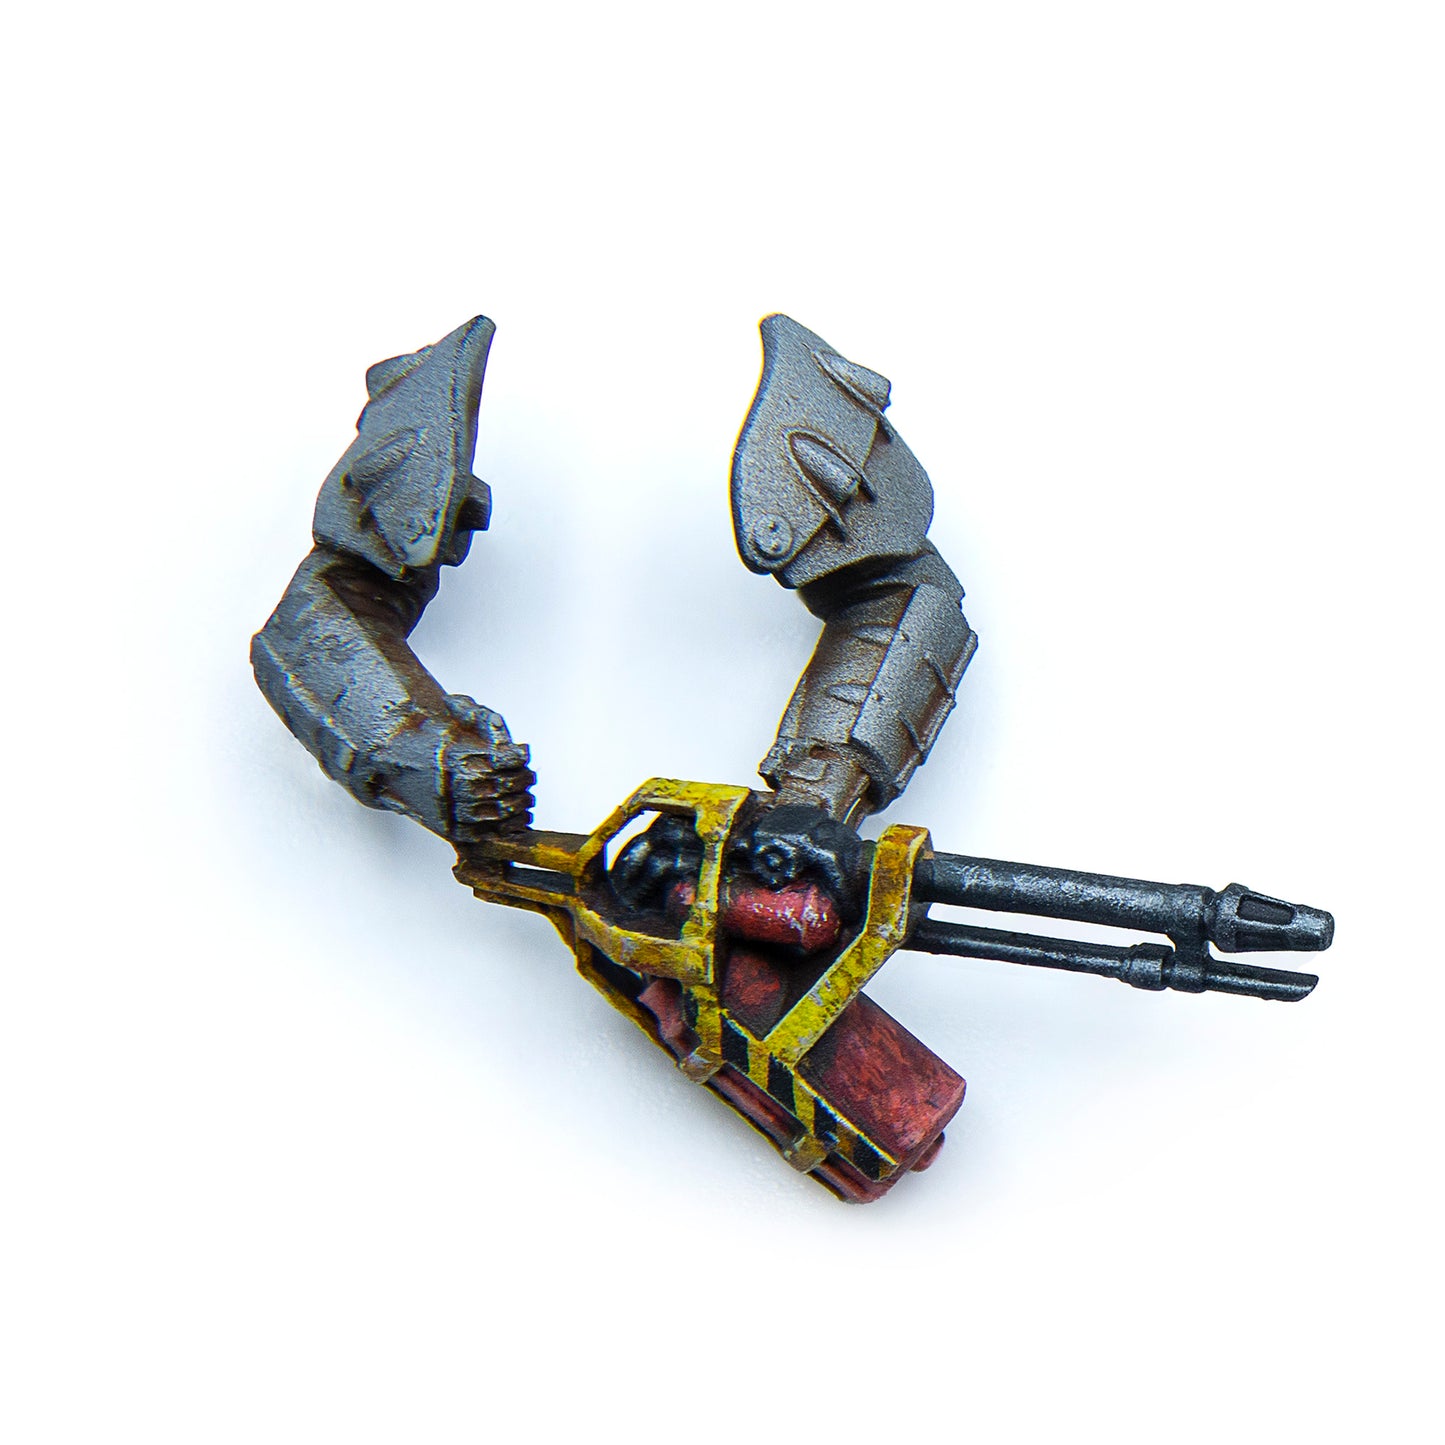 Fallout: Wasteland Warfare - Unaligned - X-01 Power Armor